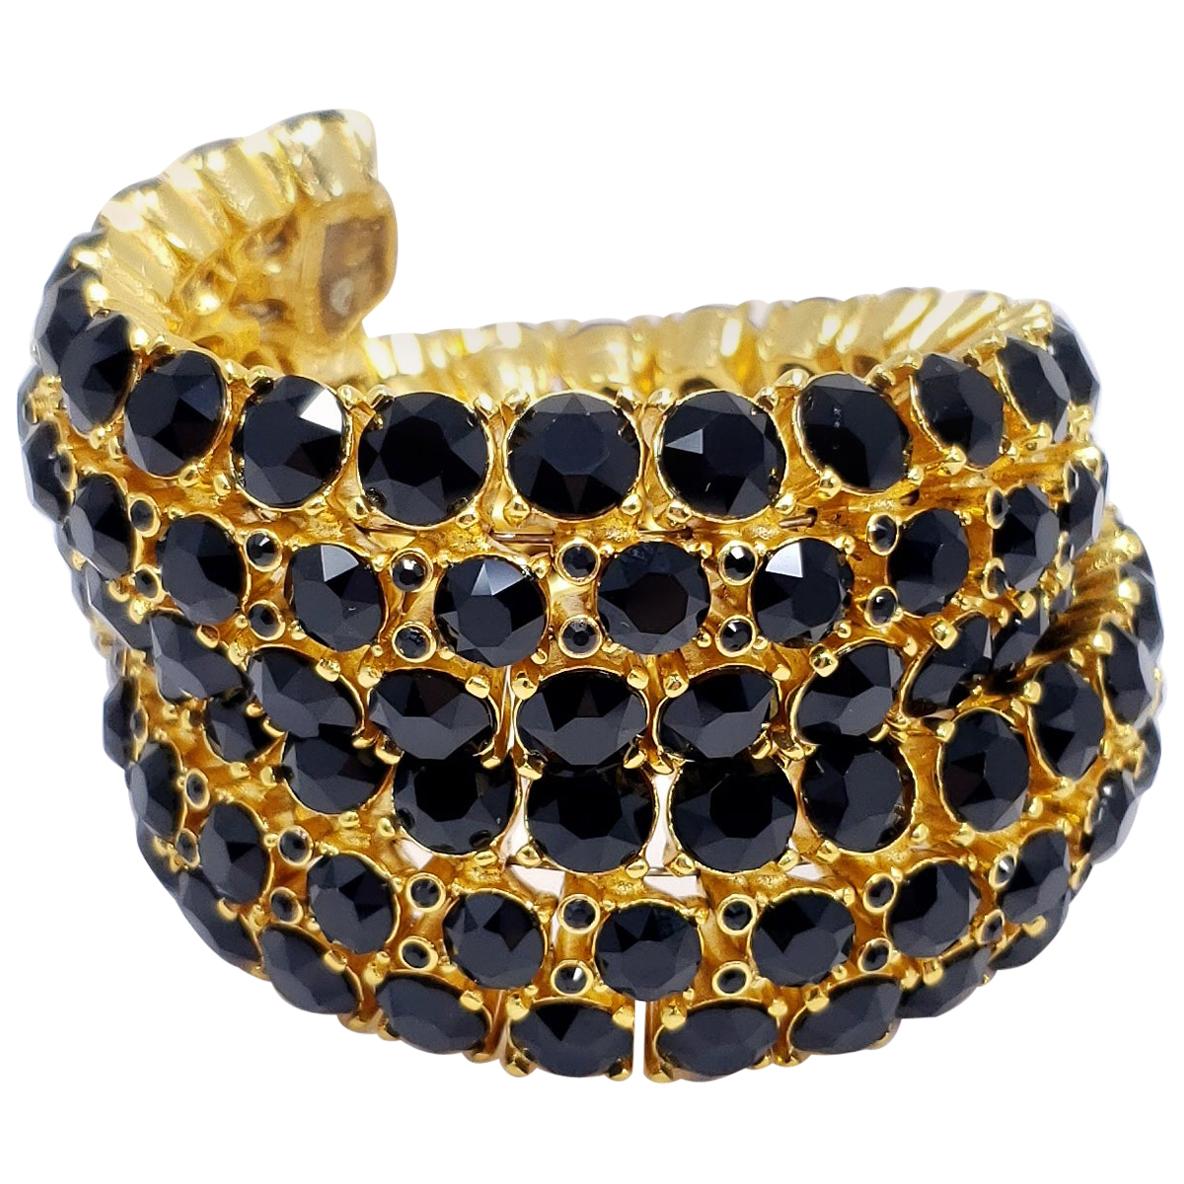 Oscar de la Renta Gold Twisting Bangle Bracelet, Black Swarovski Crystals